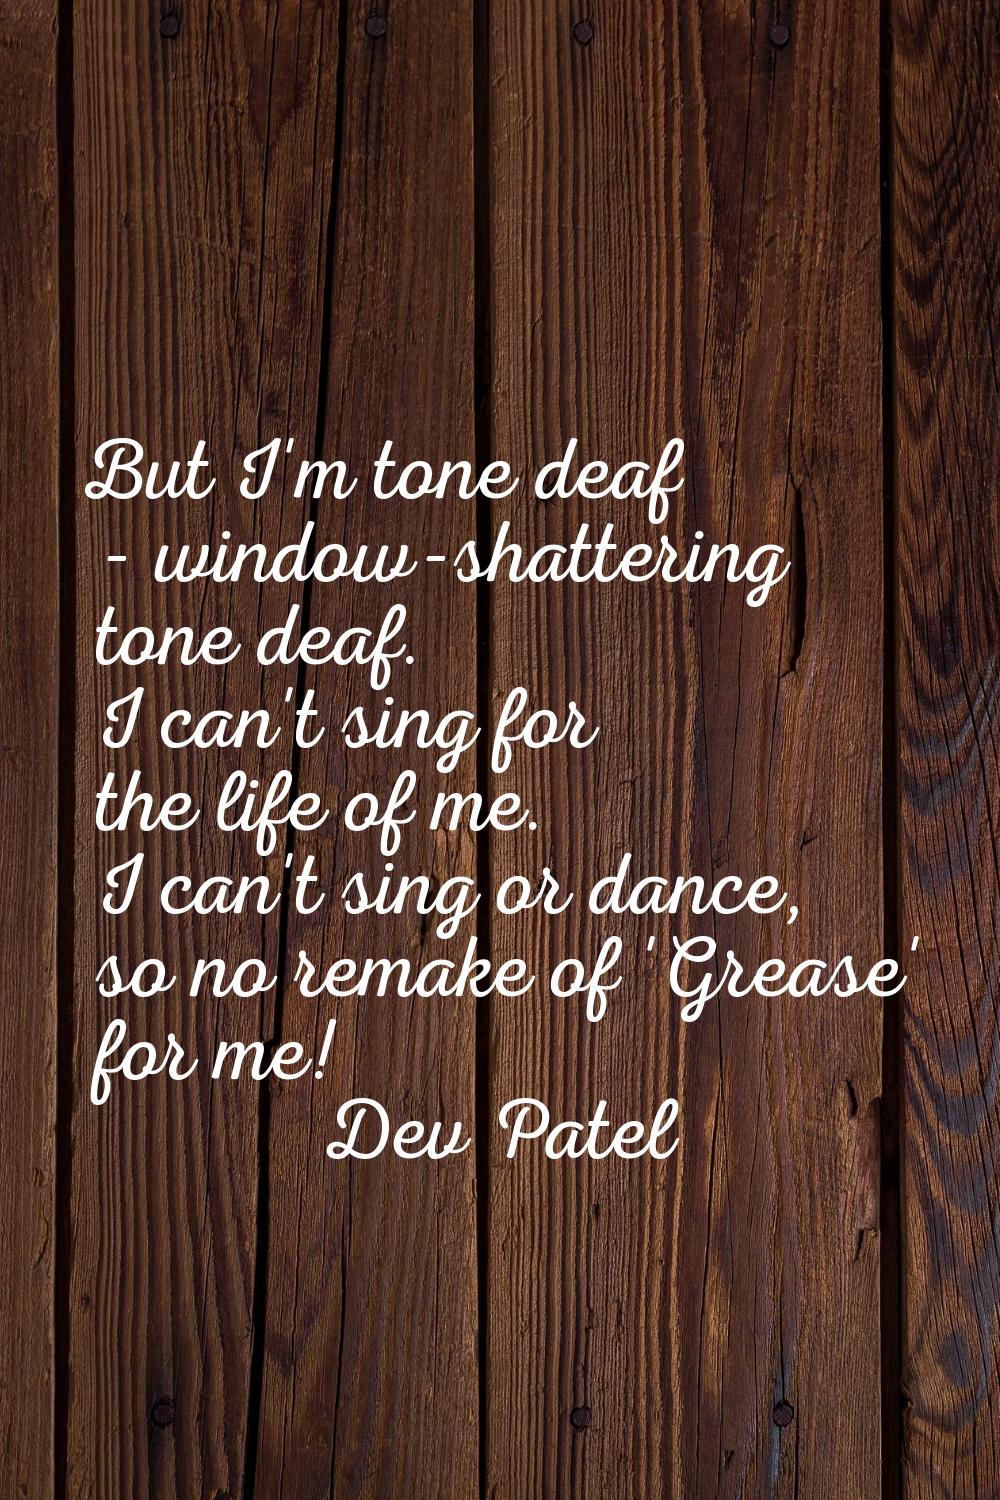 But I'm tone deaf - window-shattering tone deaf. I can't sing for the life of me. I can't sing or d